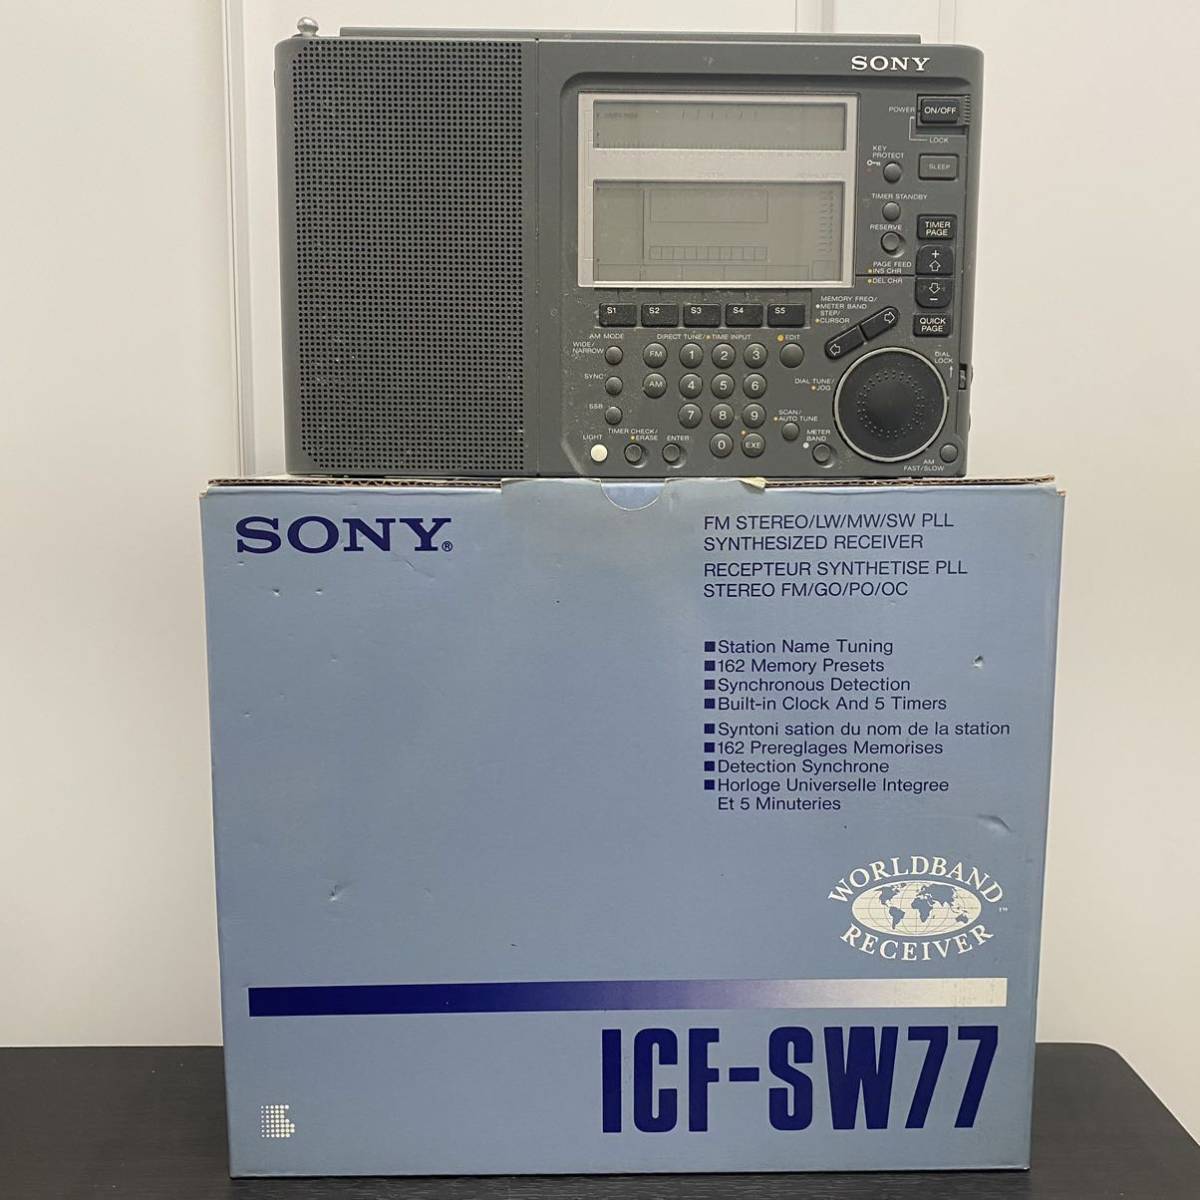 SONY ソニー ICF-SW77 SONY FMステレオ/LW/MW/SW PLLシンセサイザー ワールドバンドラジオ 元箱付属品付 